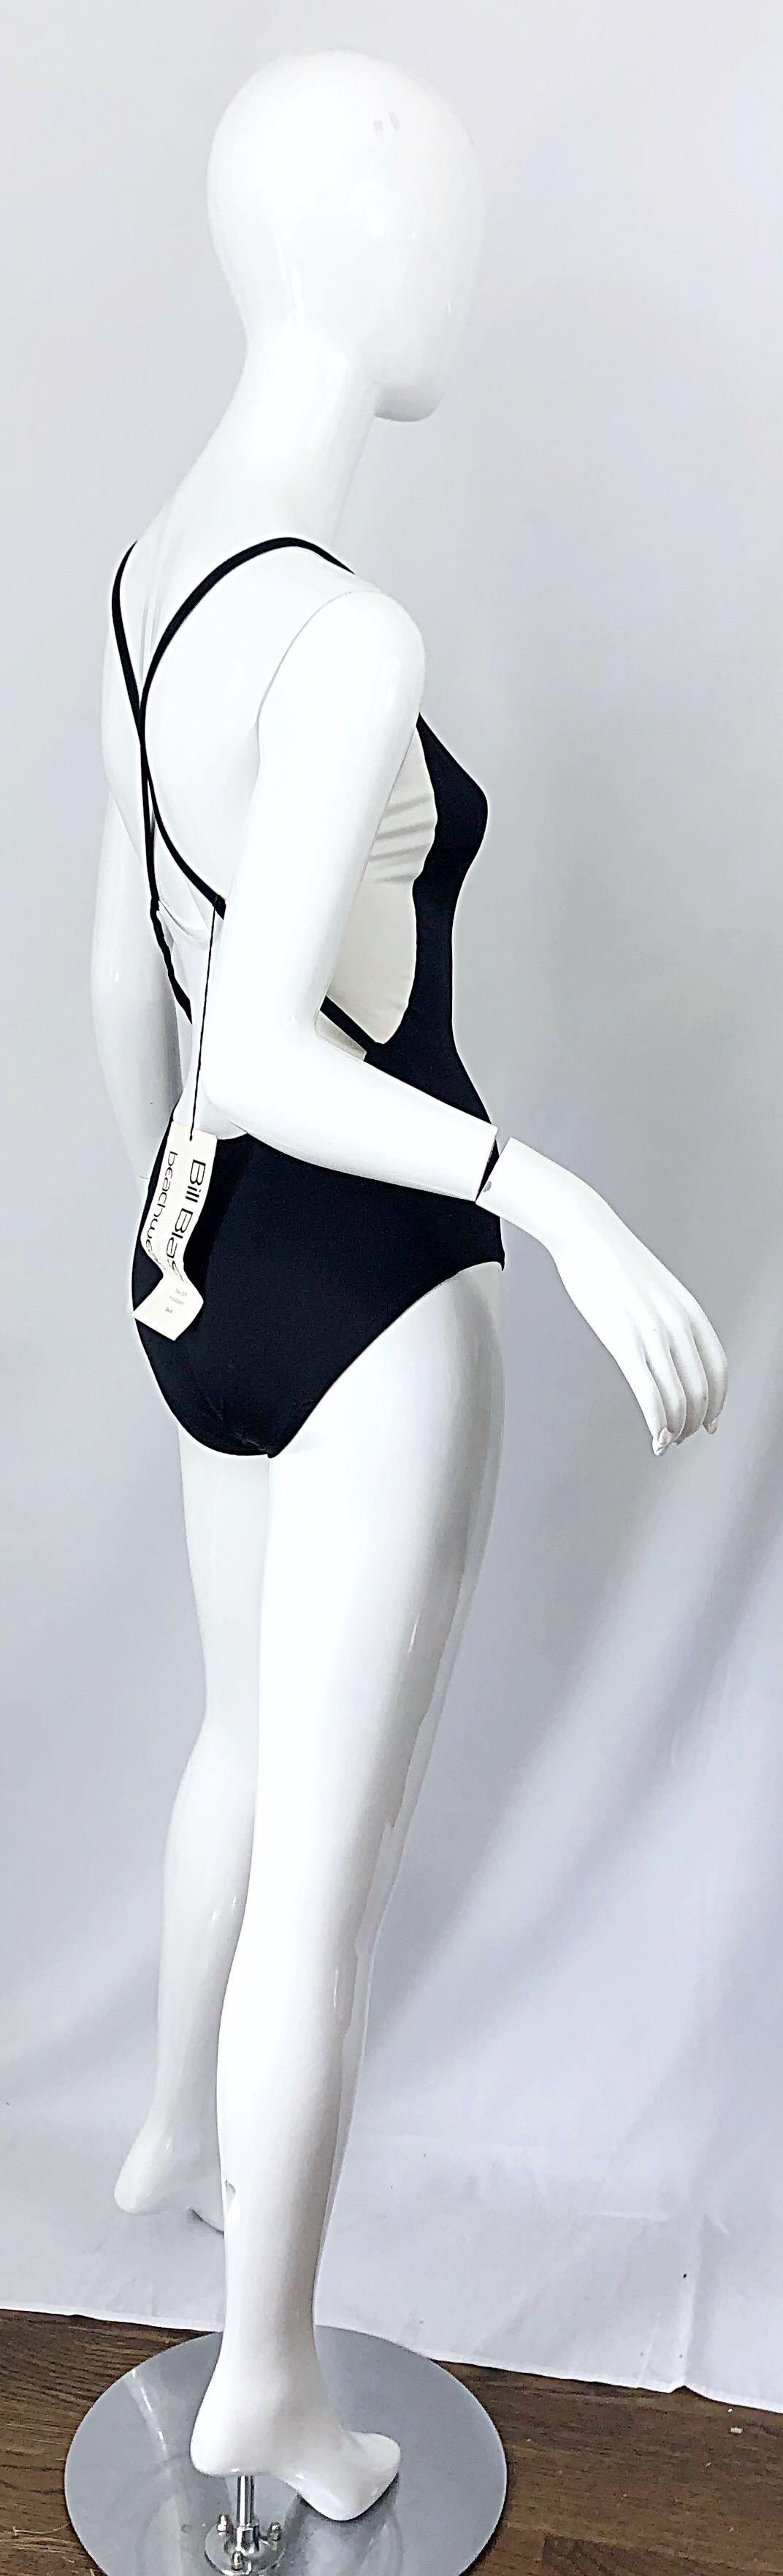 NWT Bill Blass 1980s Sz 8 Trompe l'oeil Black and White 80s Swimsuit Bodysuit 6